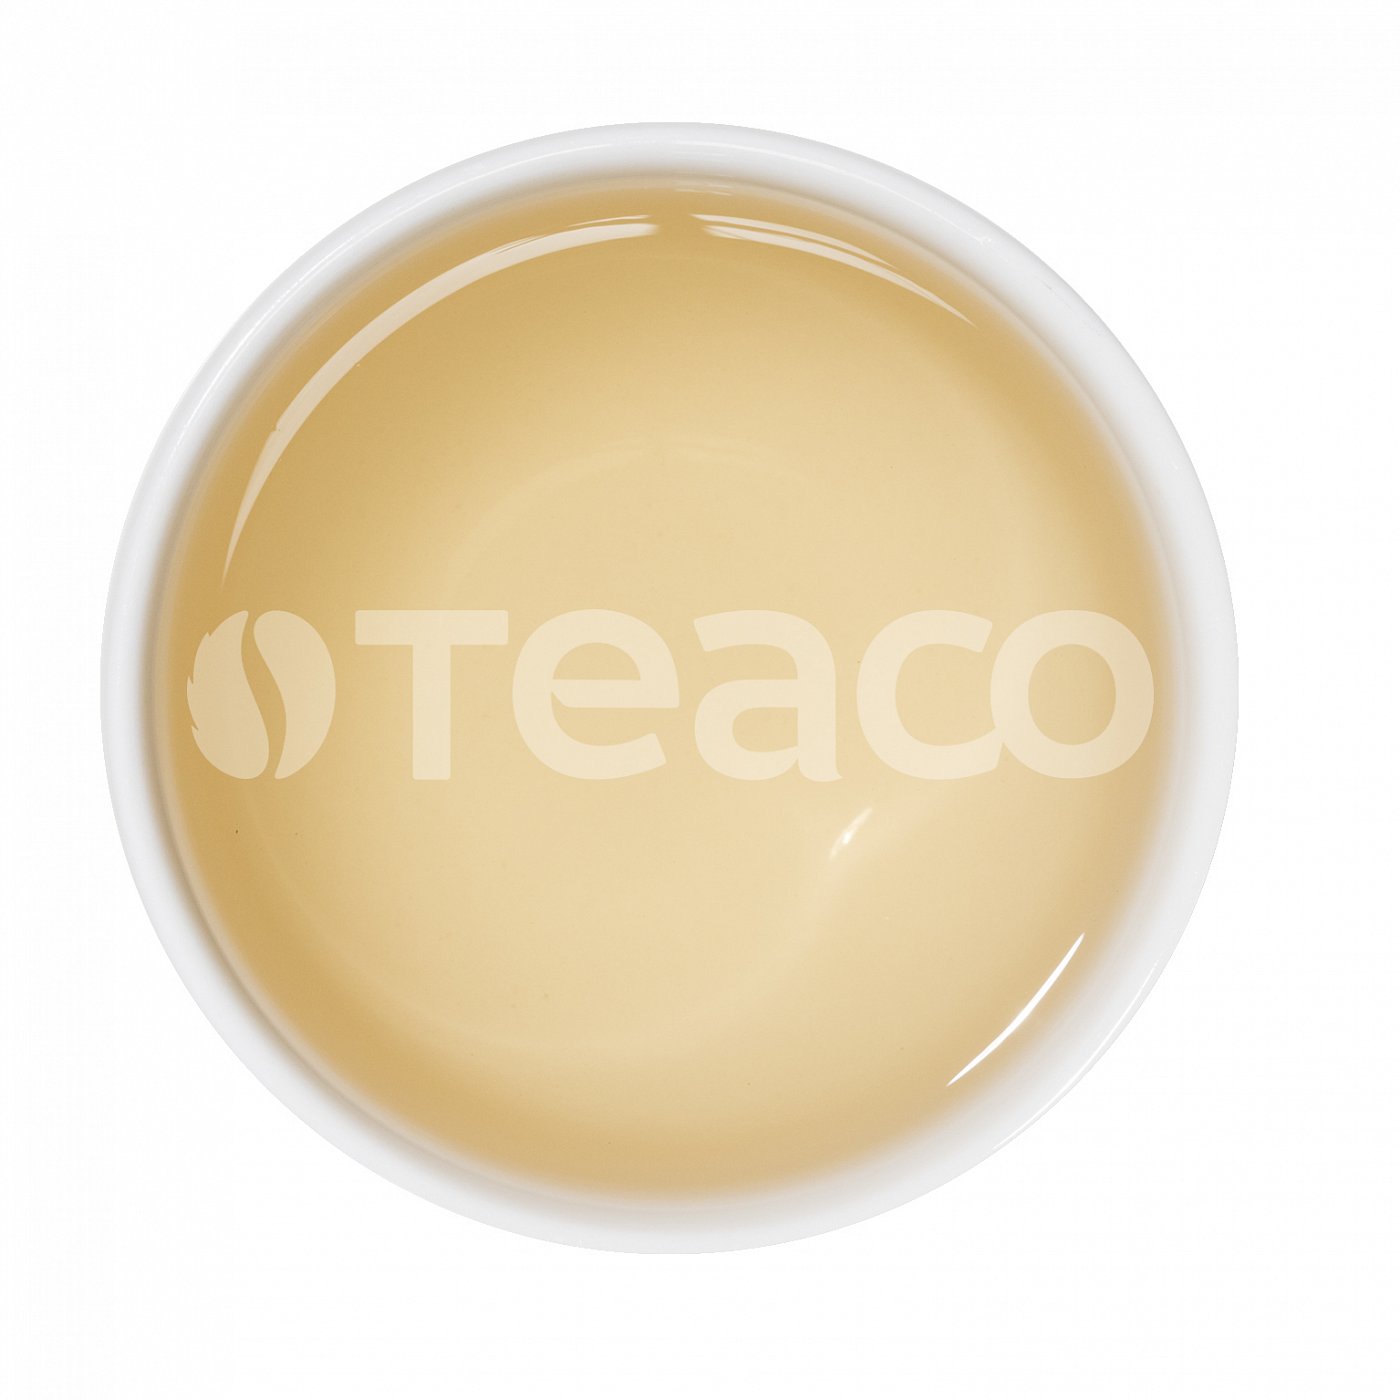 Пакетированный травяной чай на чашку "Мята марокканская" TEACO, 30 пак. по 1,1 г